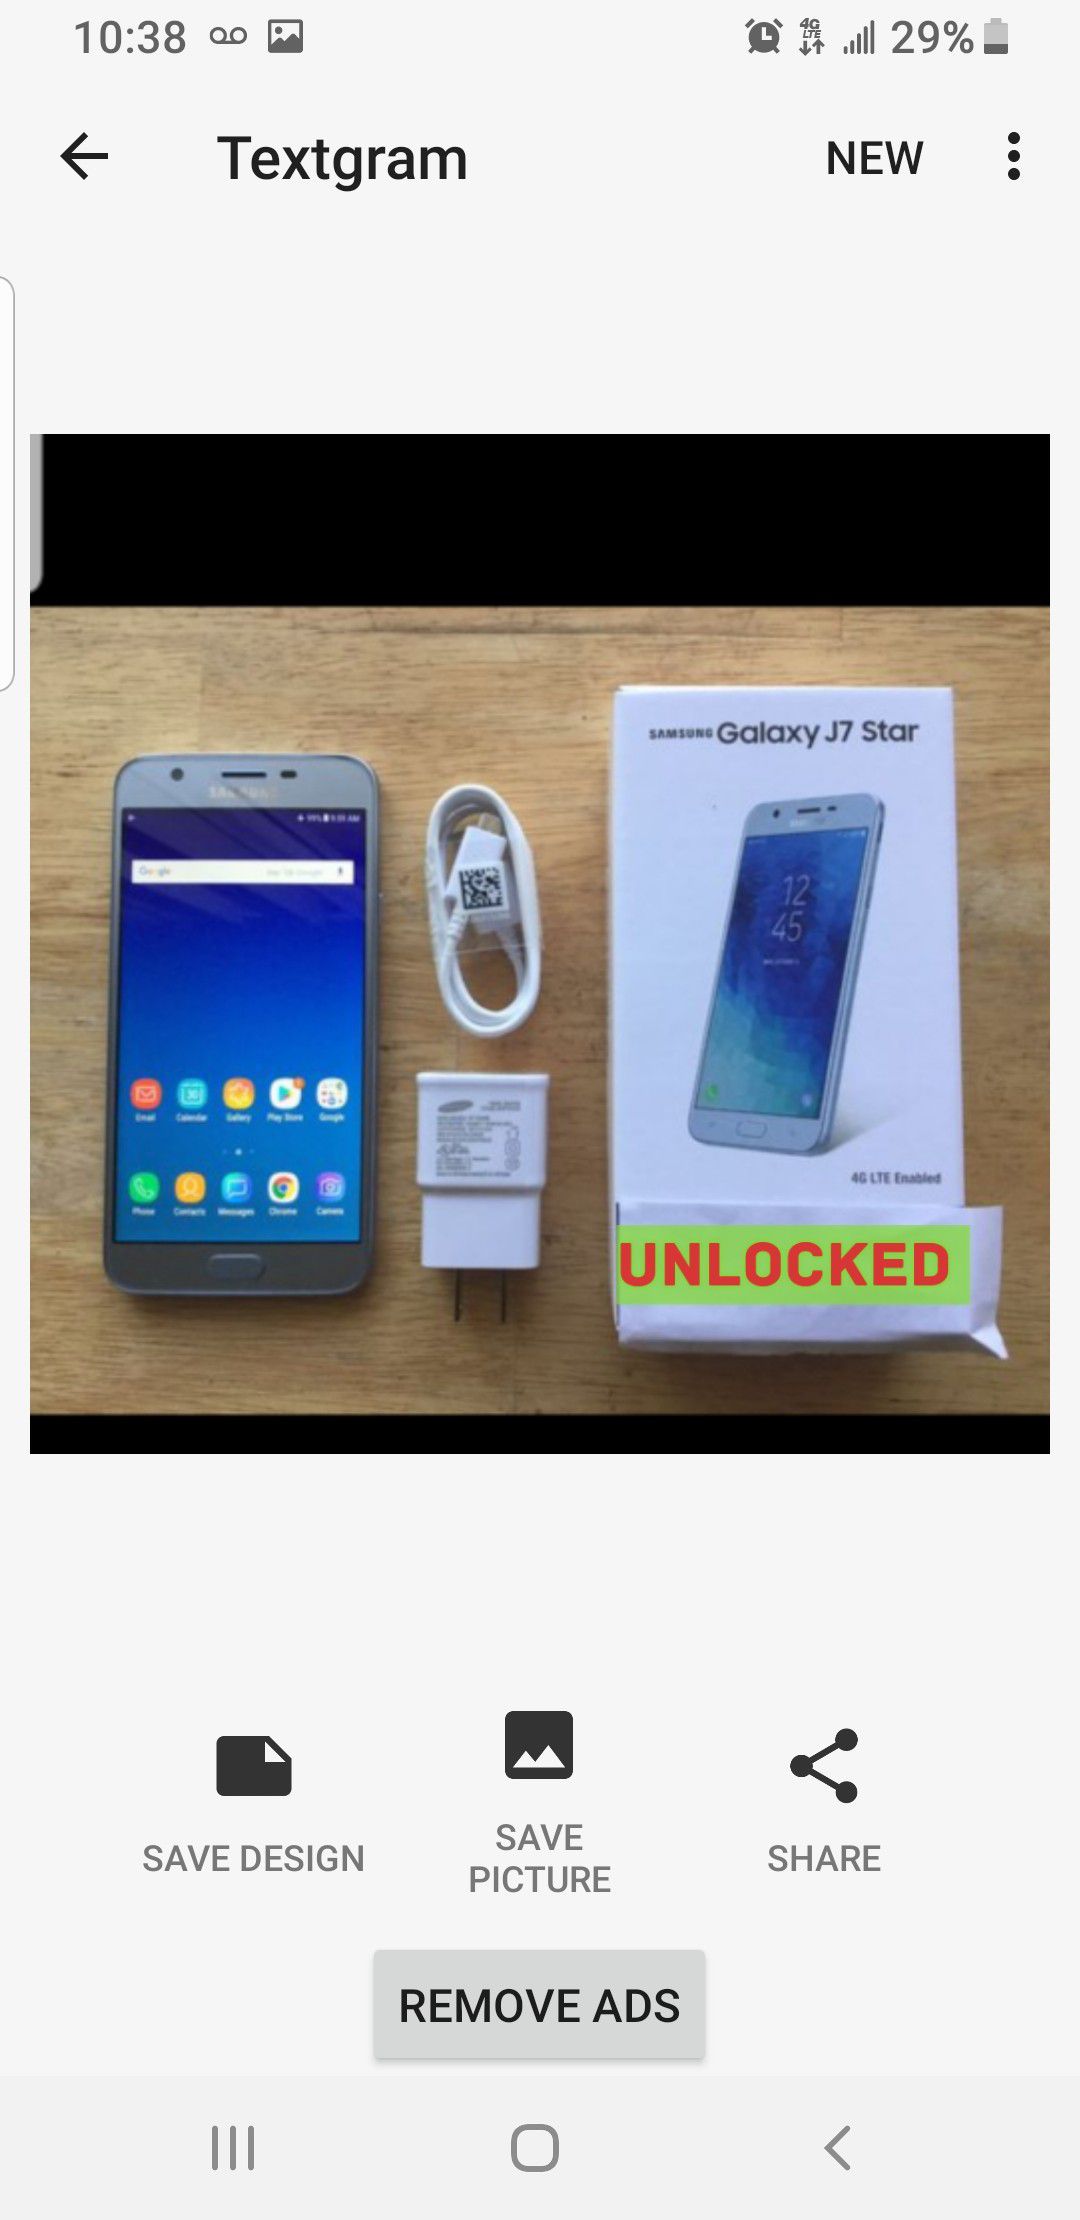 Samsung Galaxy J7 star brand new unlocked